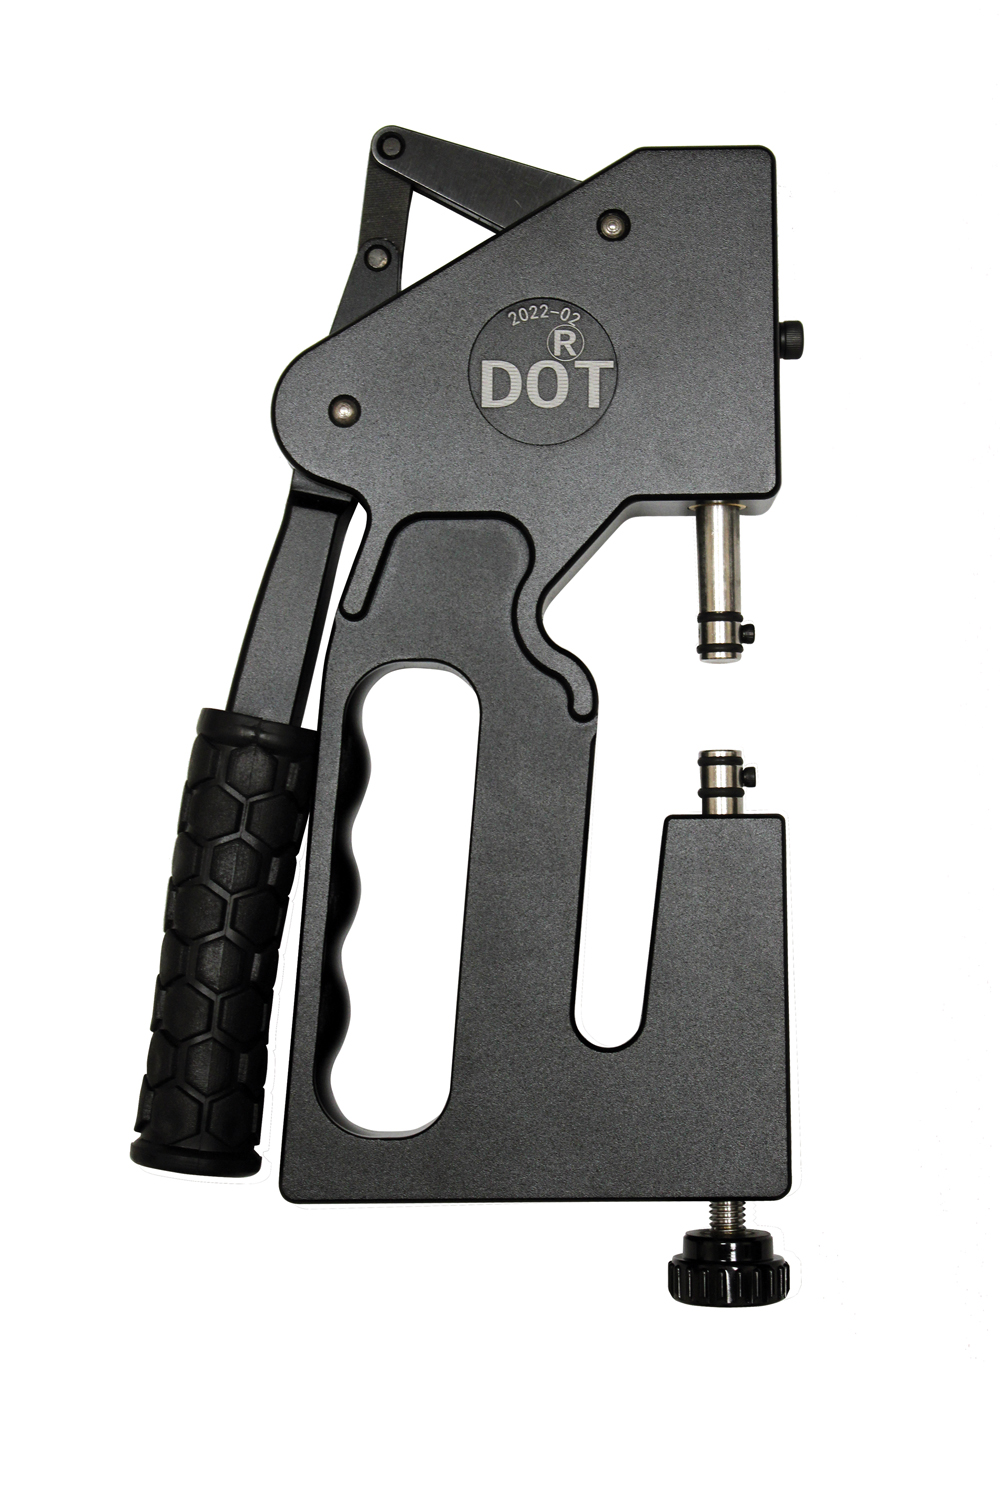 DOT® Snapmaster™ Model 89CM840 Hand Press Image